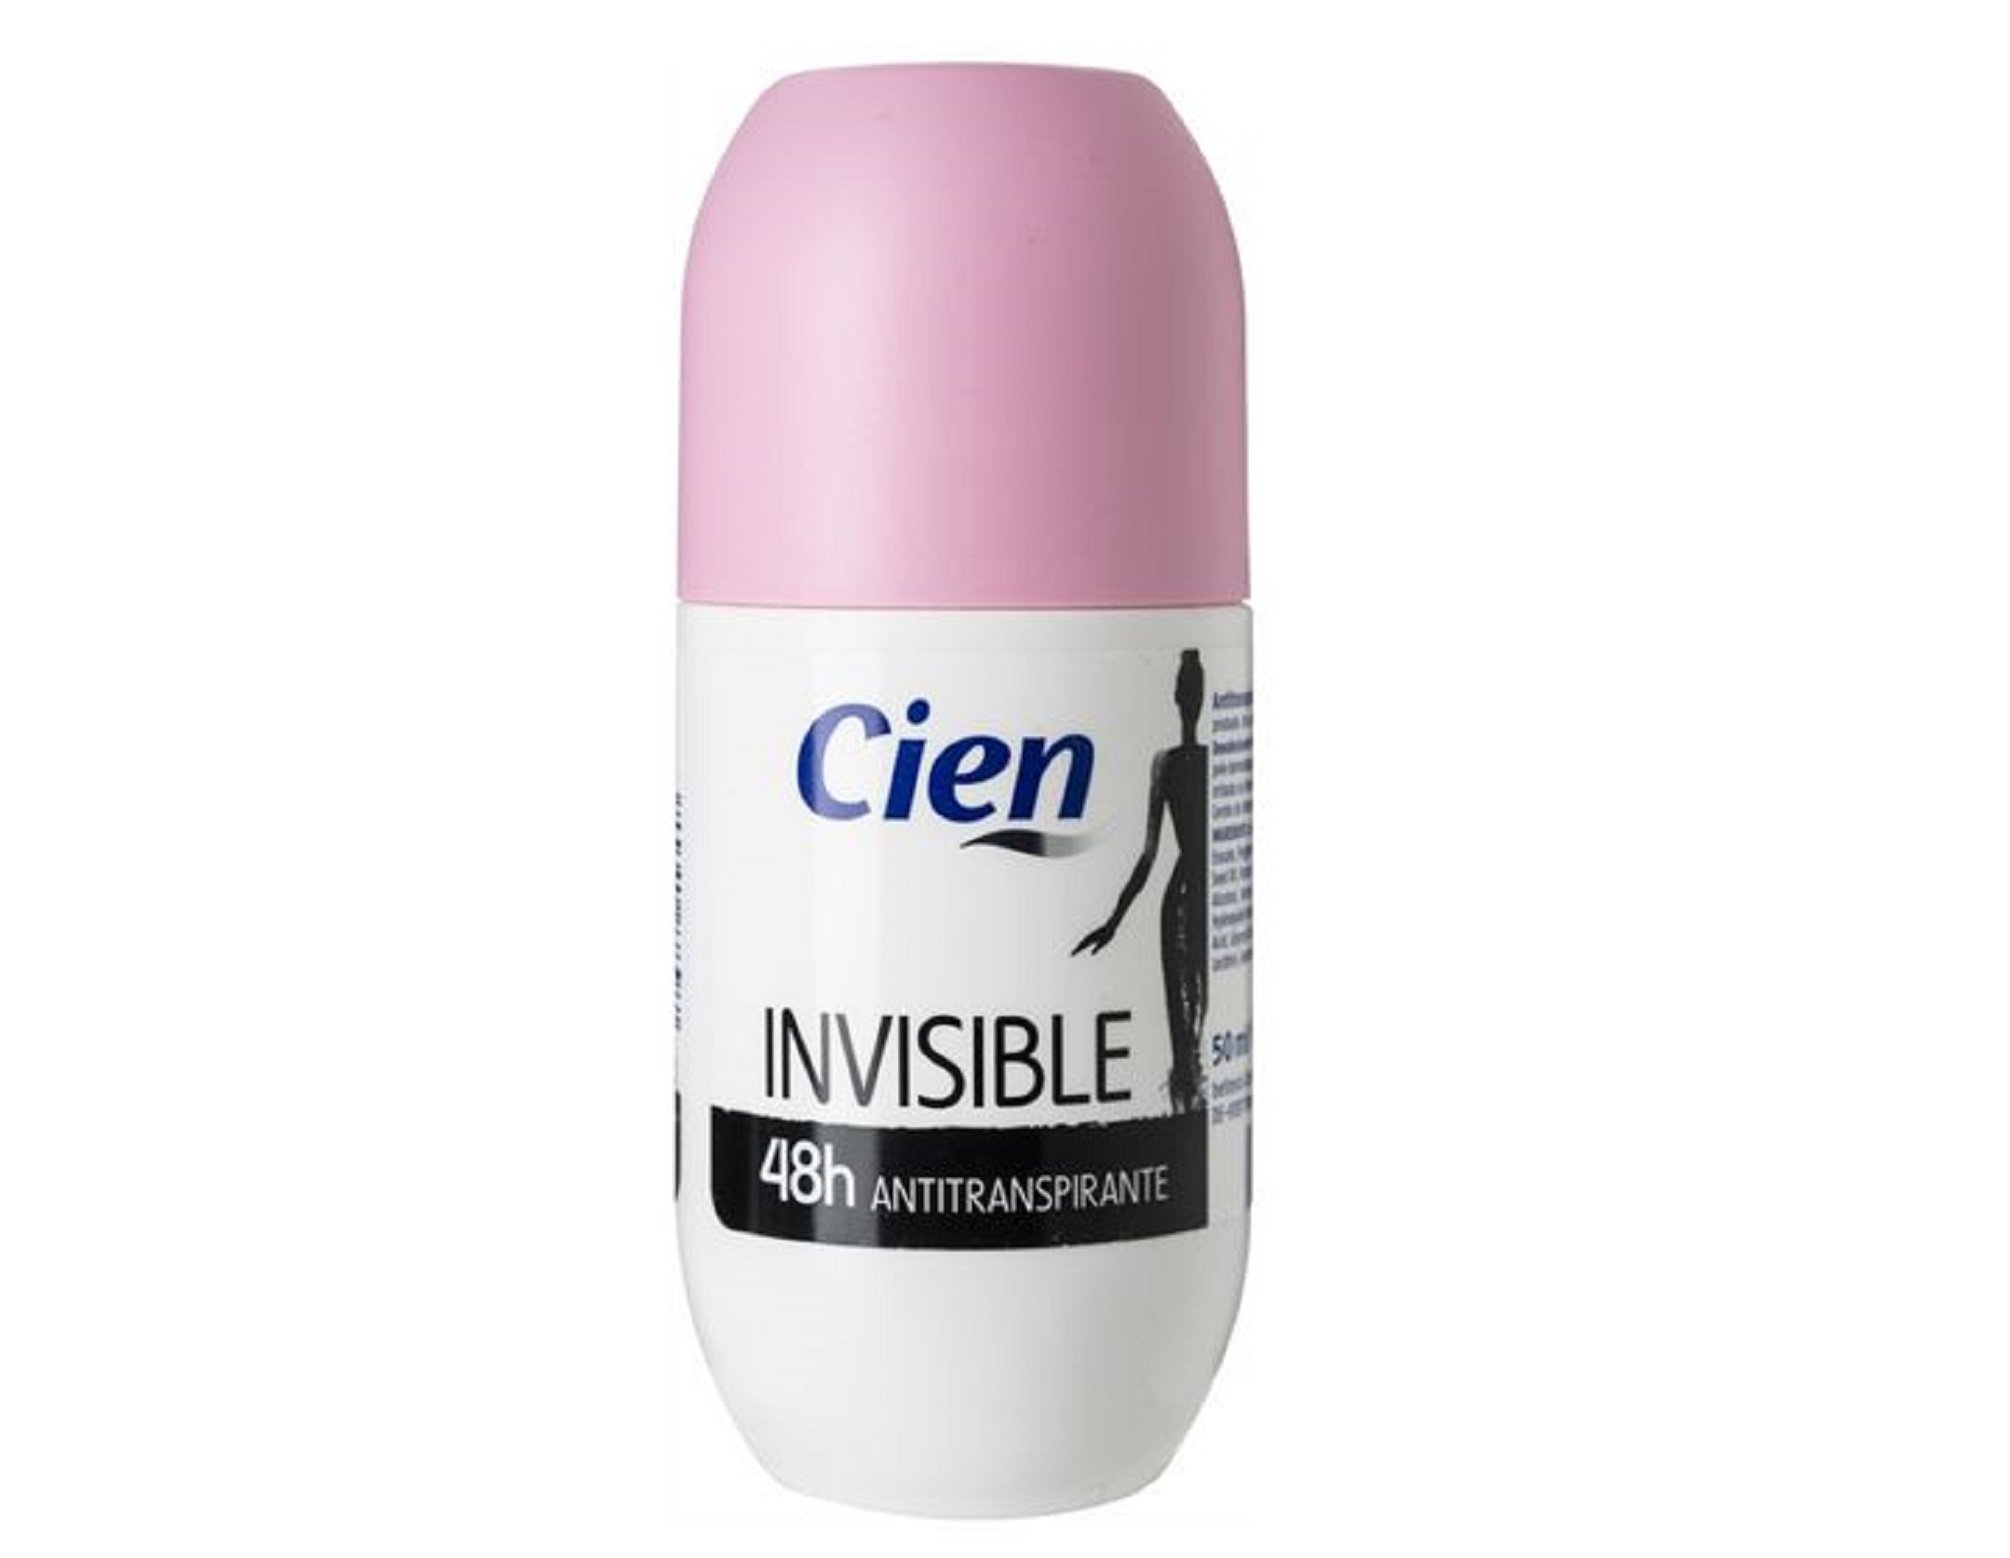 Total invisible desodorante / Lidl